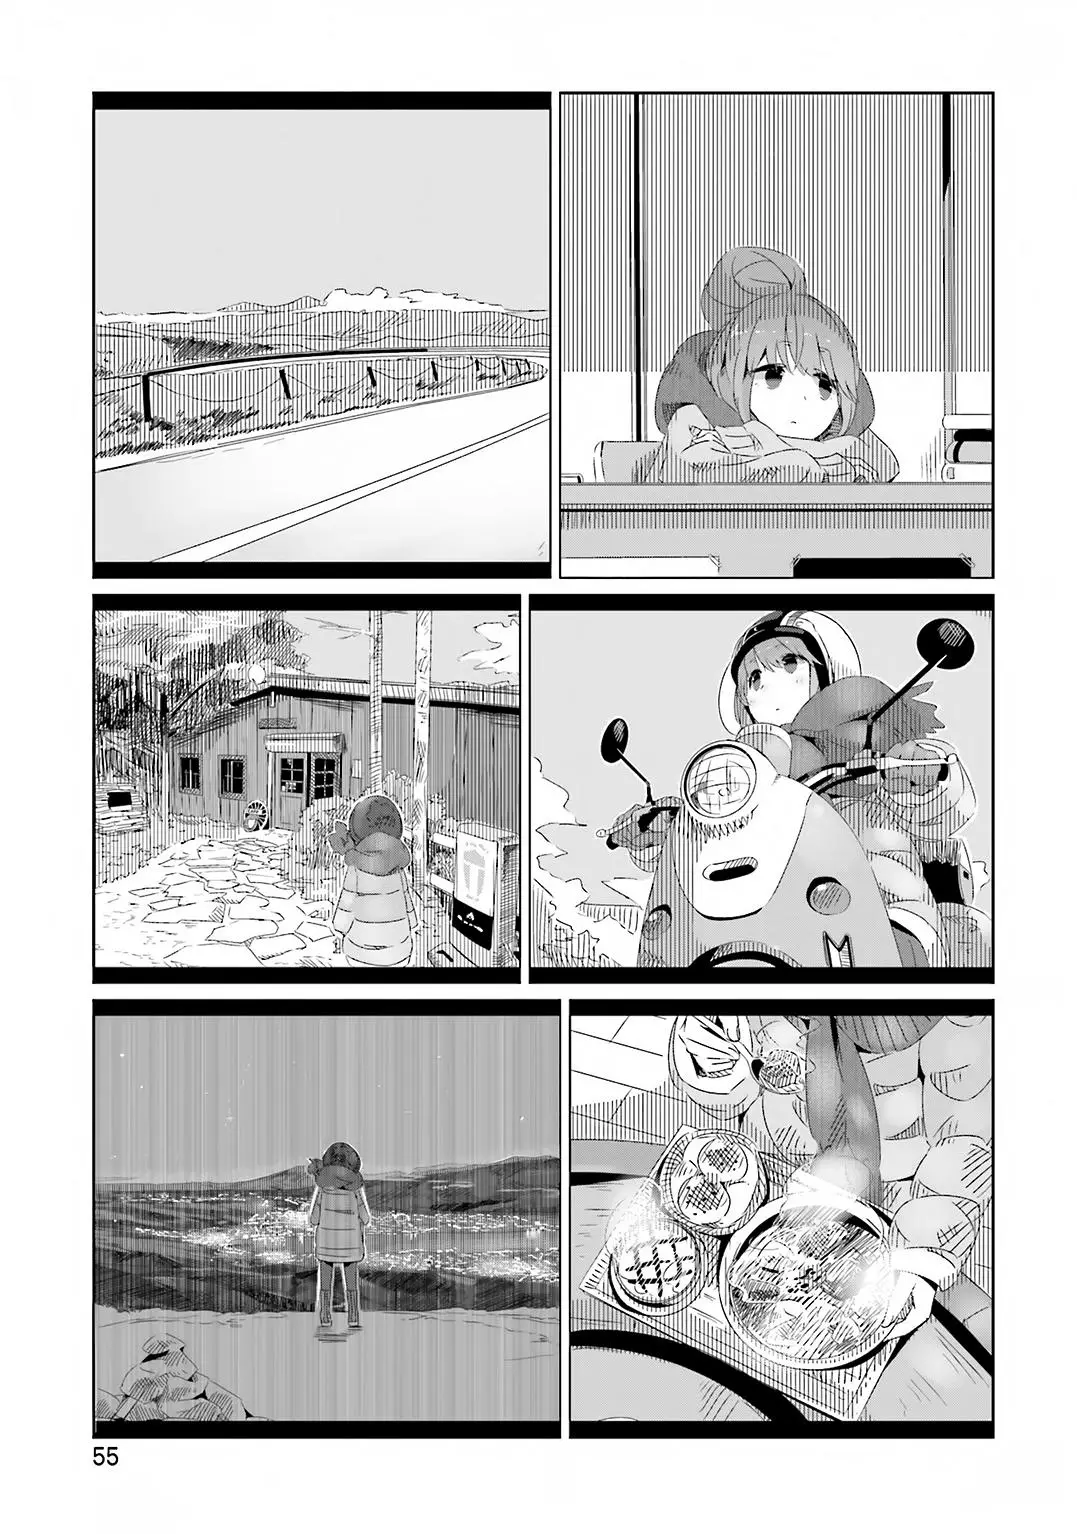 Yurucamp - 9 page 3-4603c187